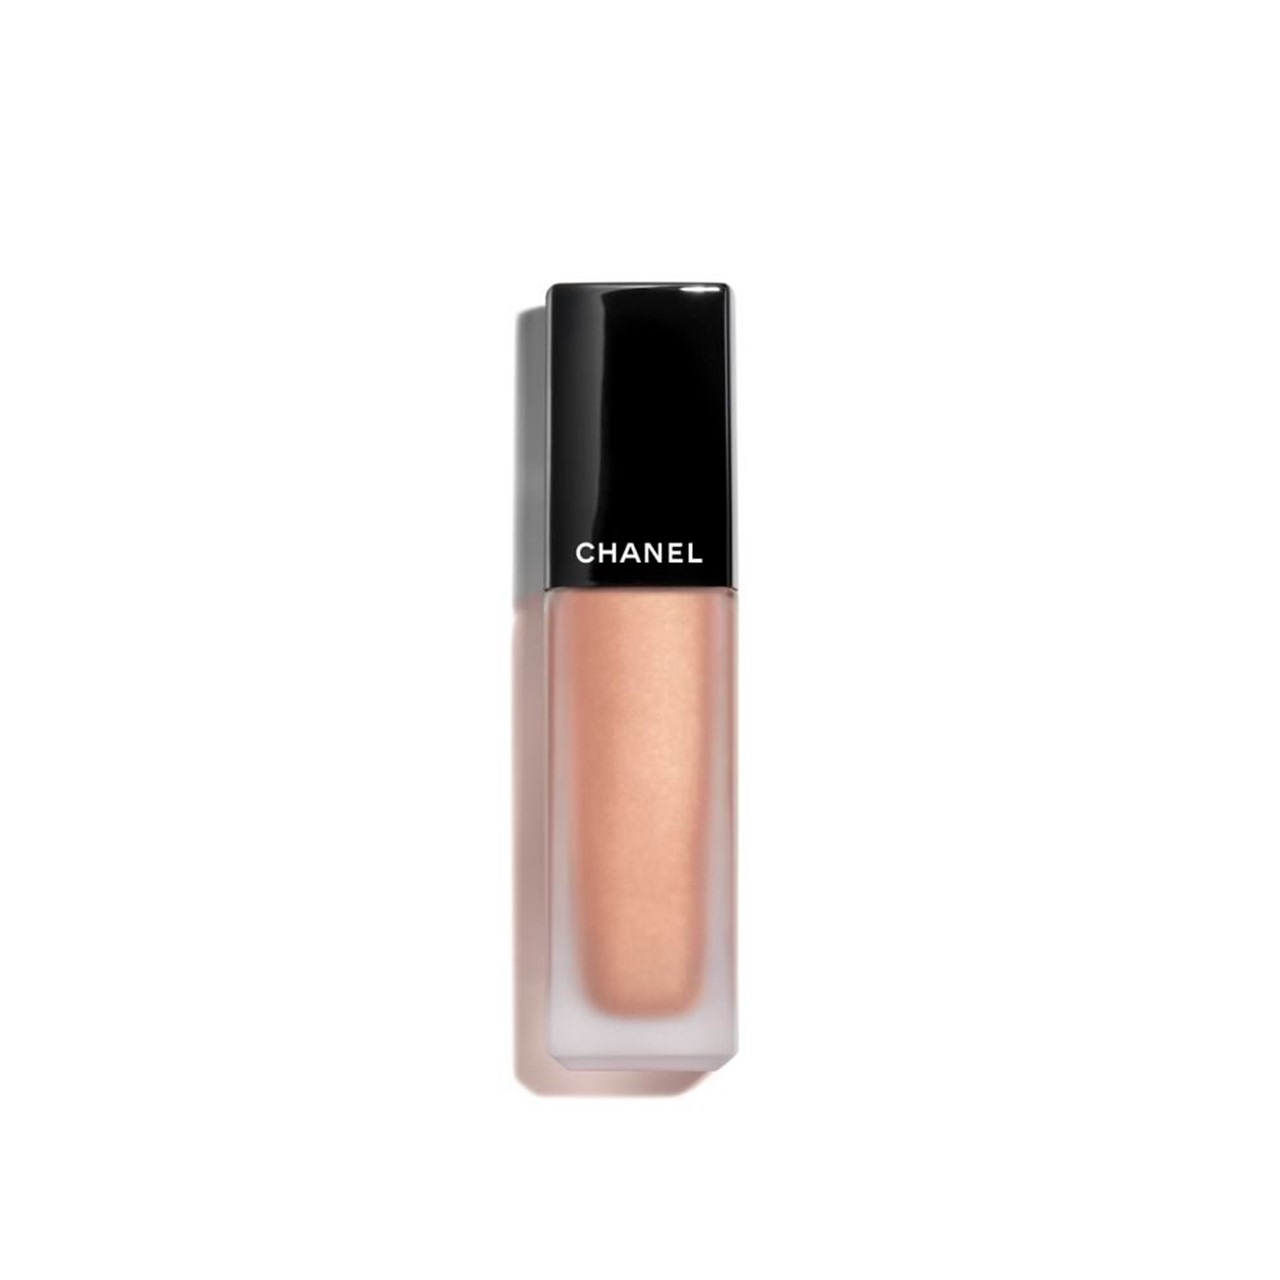 Chanel To Launch Rouge Allure Liquid Powder Matte Lipstick